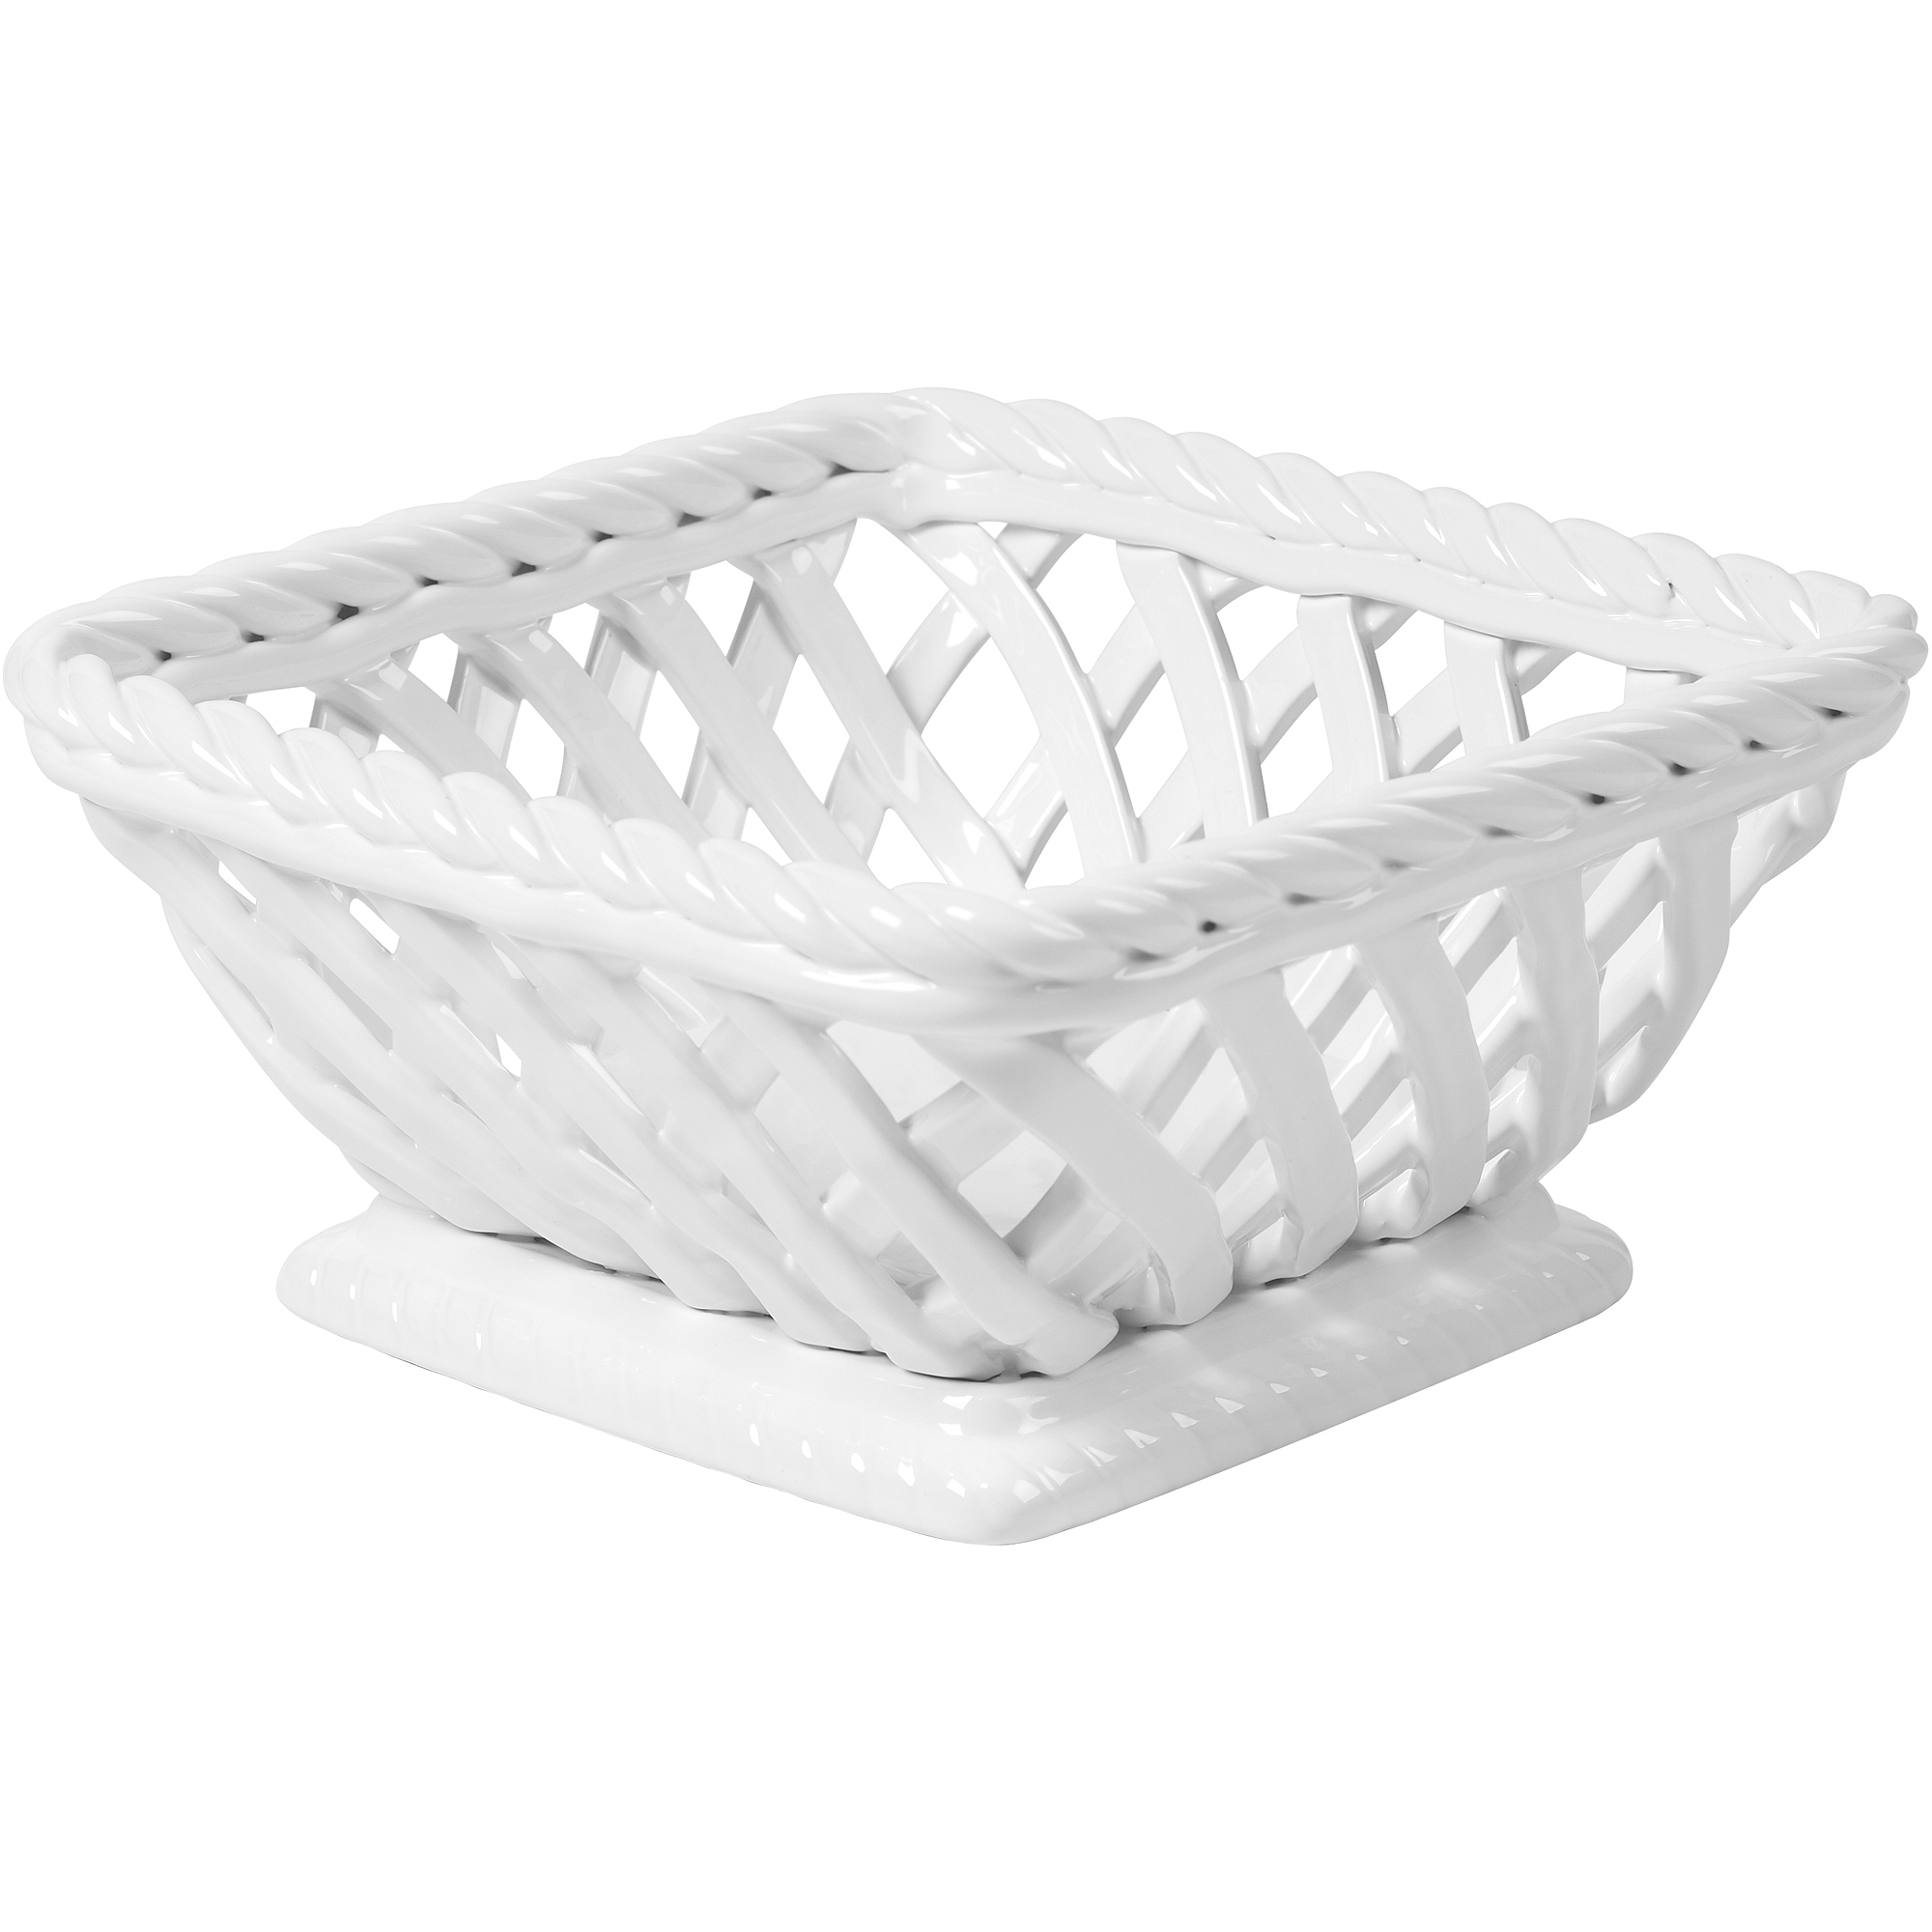 Gallery 9 " Square White Ceramic Bread Basket - image 1 of 5